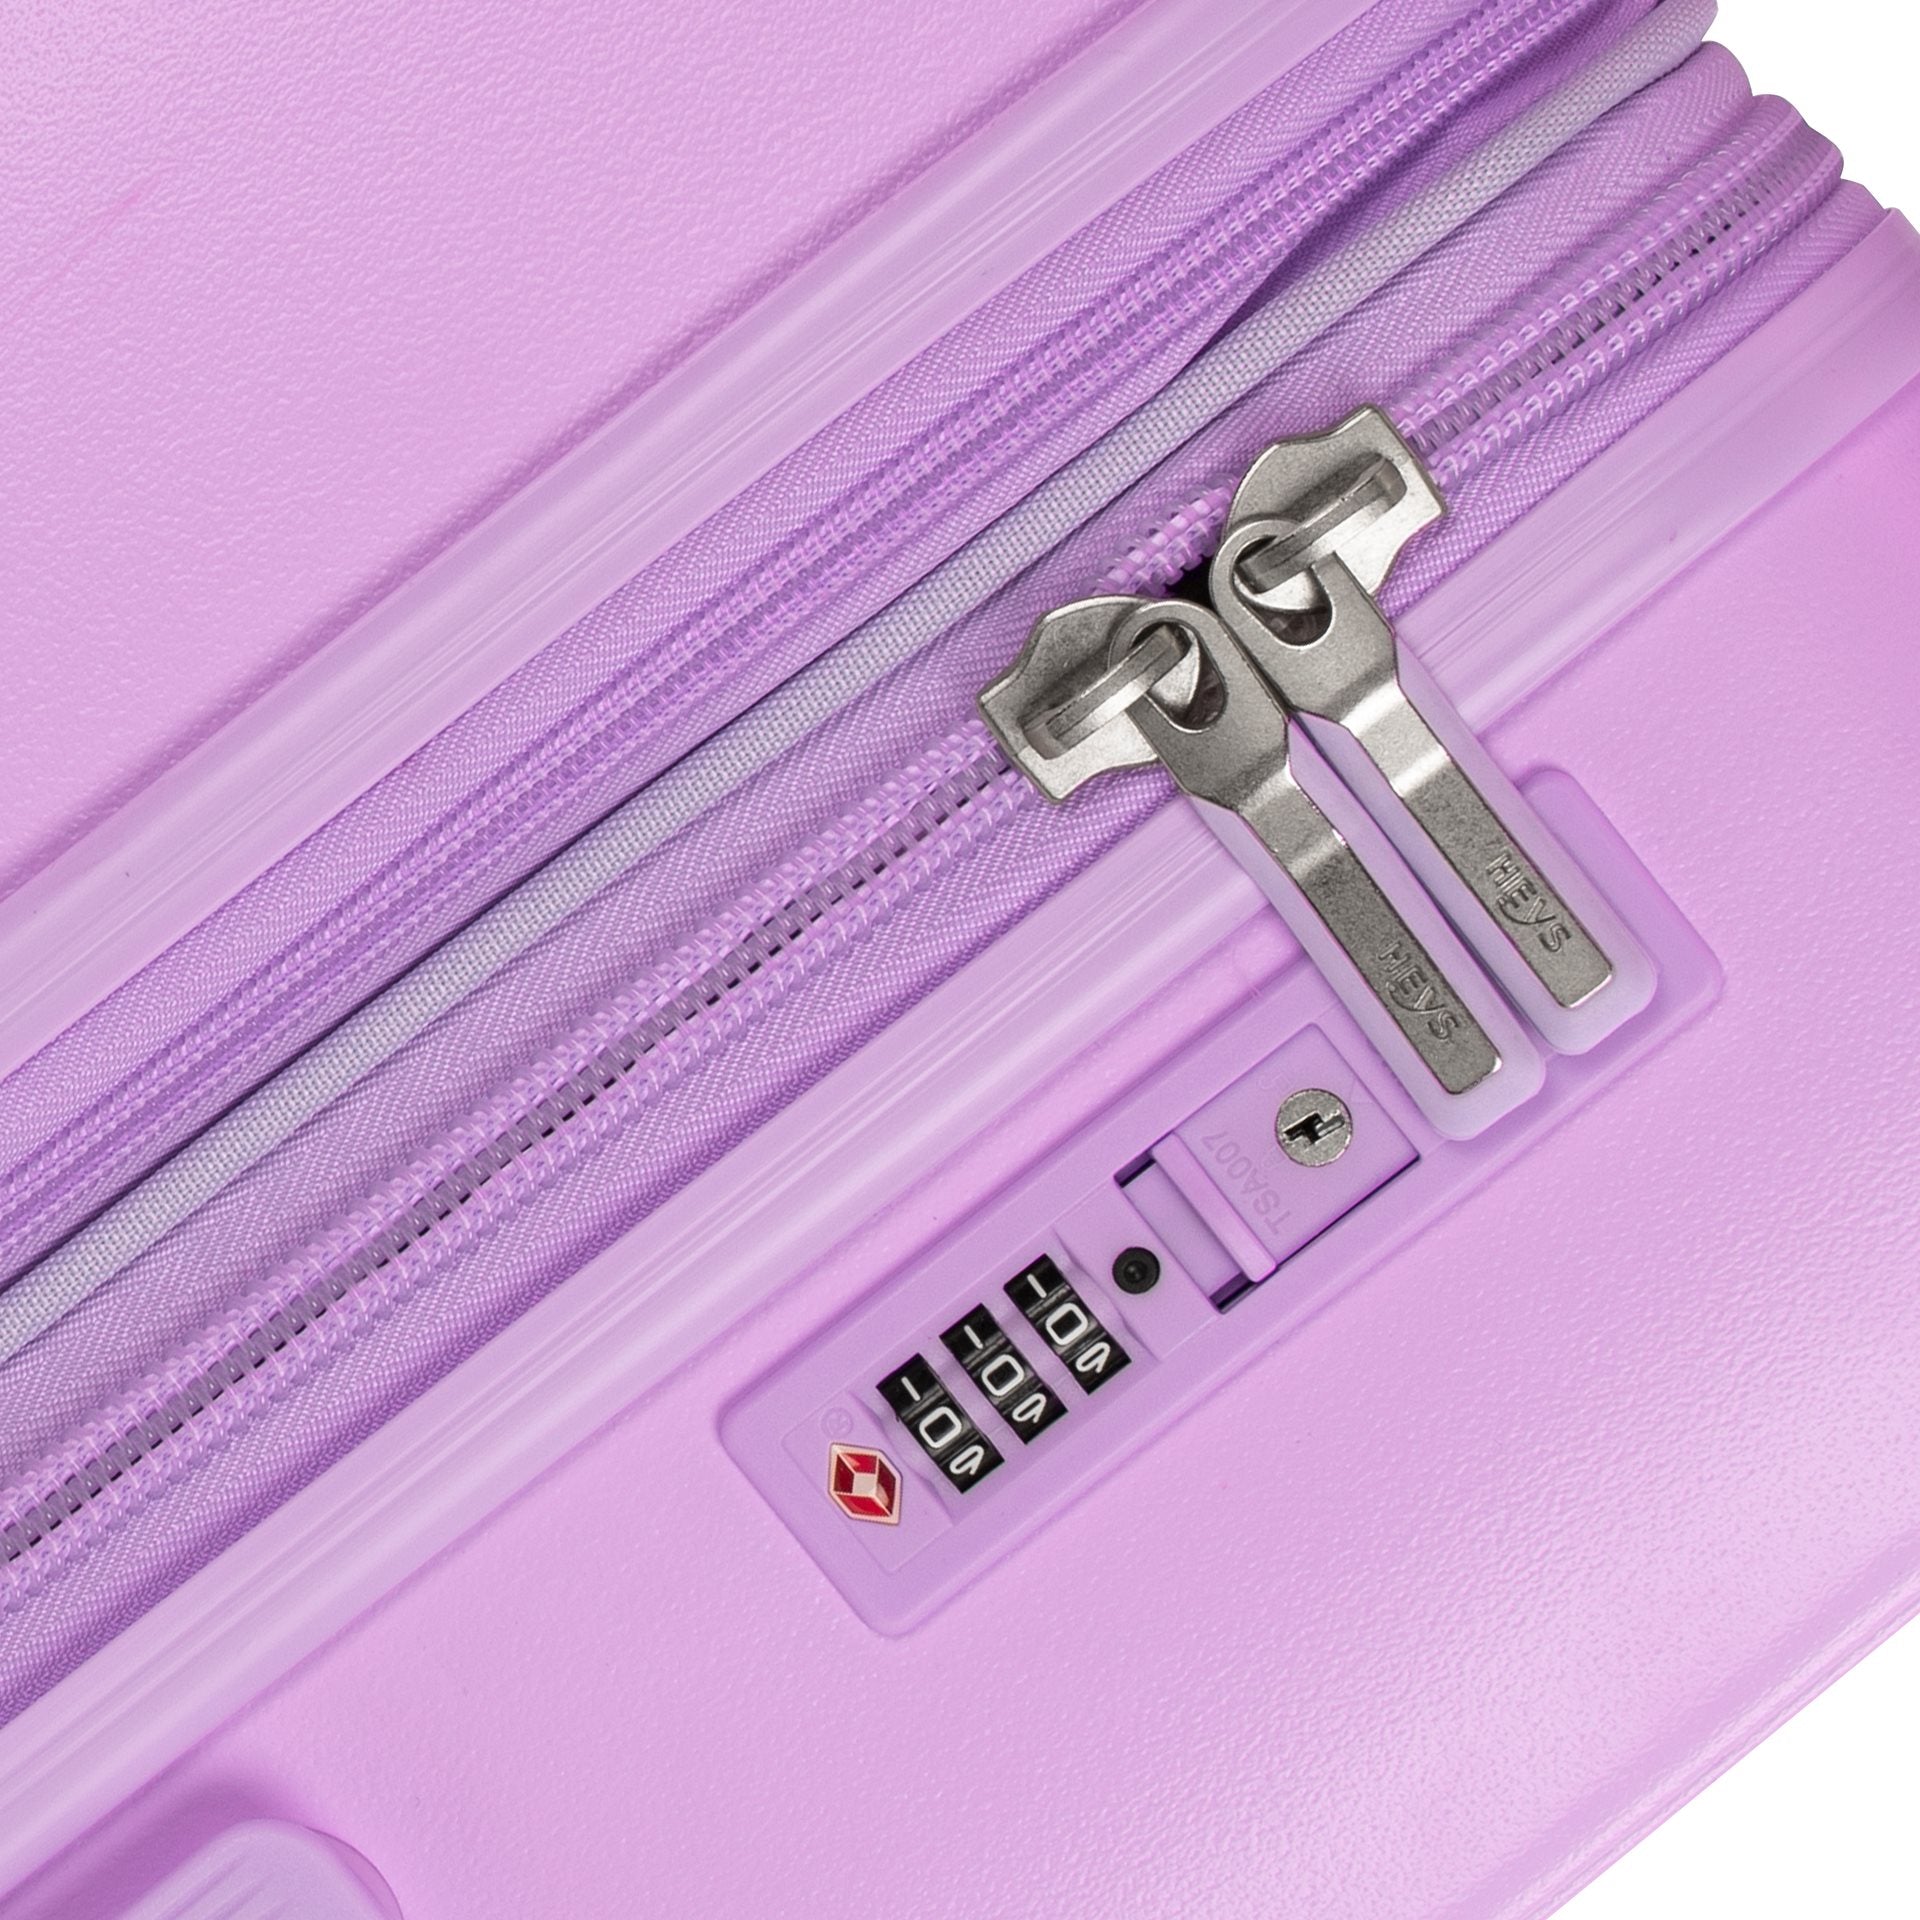 Heys Pastel Koffer - 21" (53 cm)  - Lavender Handbagage Koffer - Reisartikelen-nl